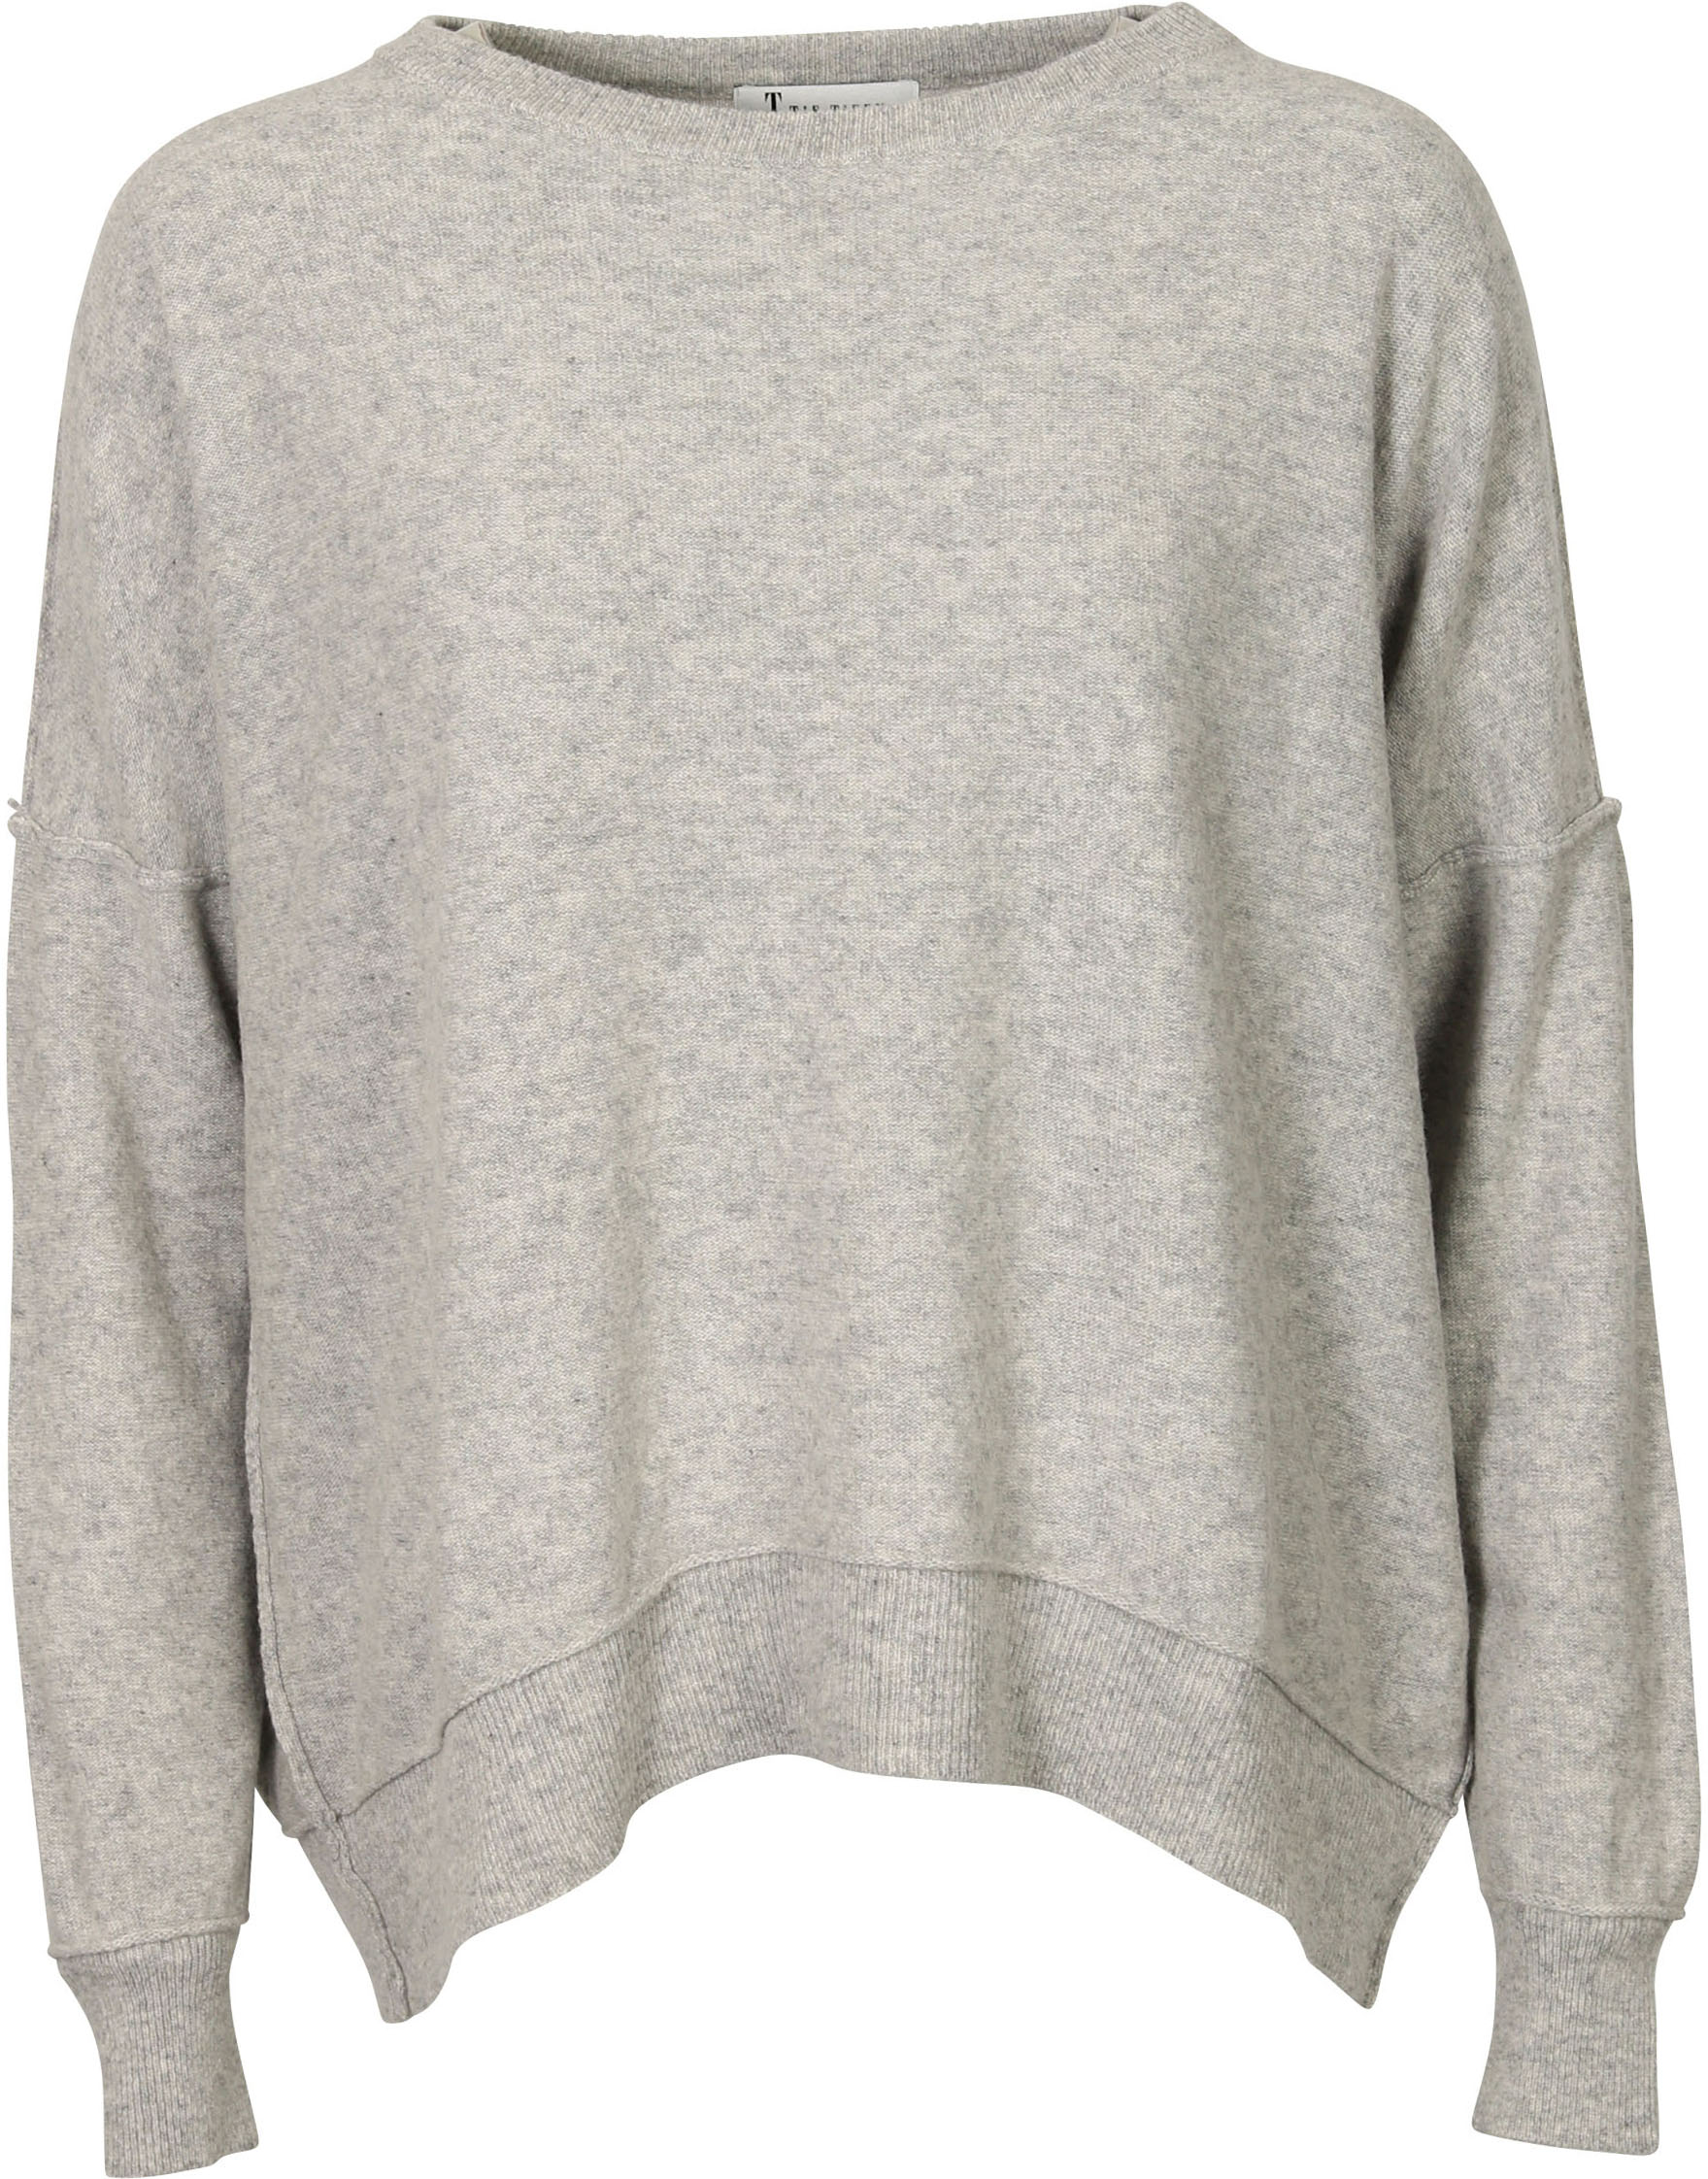 Tif Tiffy Knit Sweater Light Grey S/M